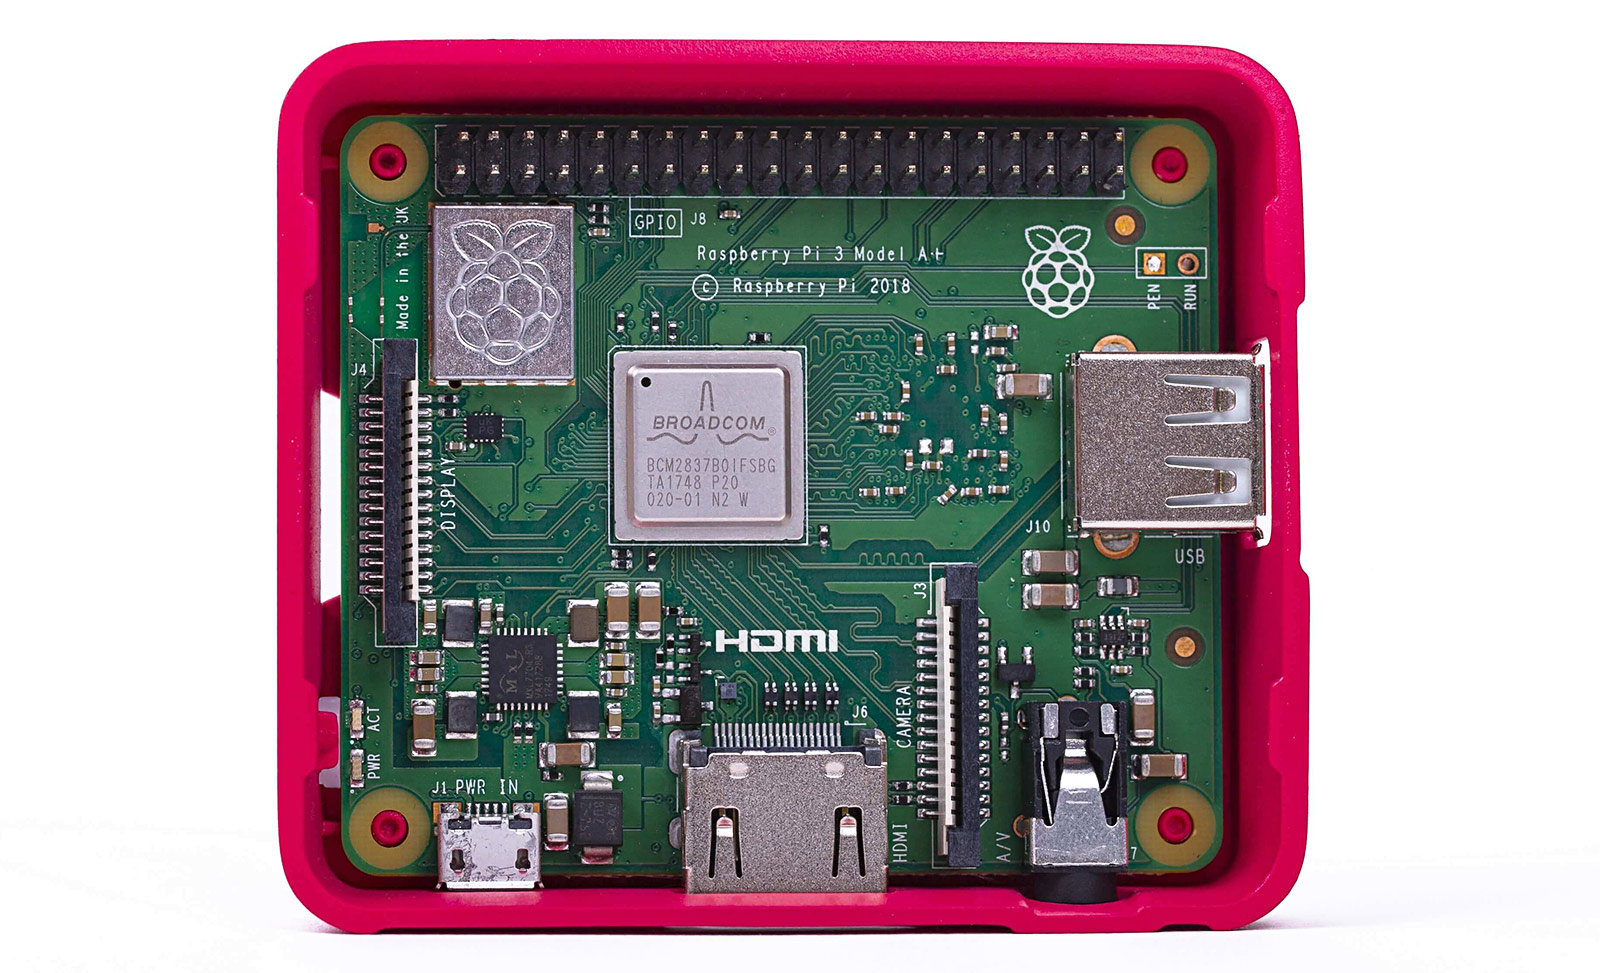 Raspberry Pi 3 Model A+.